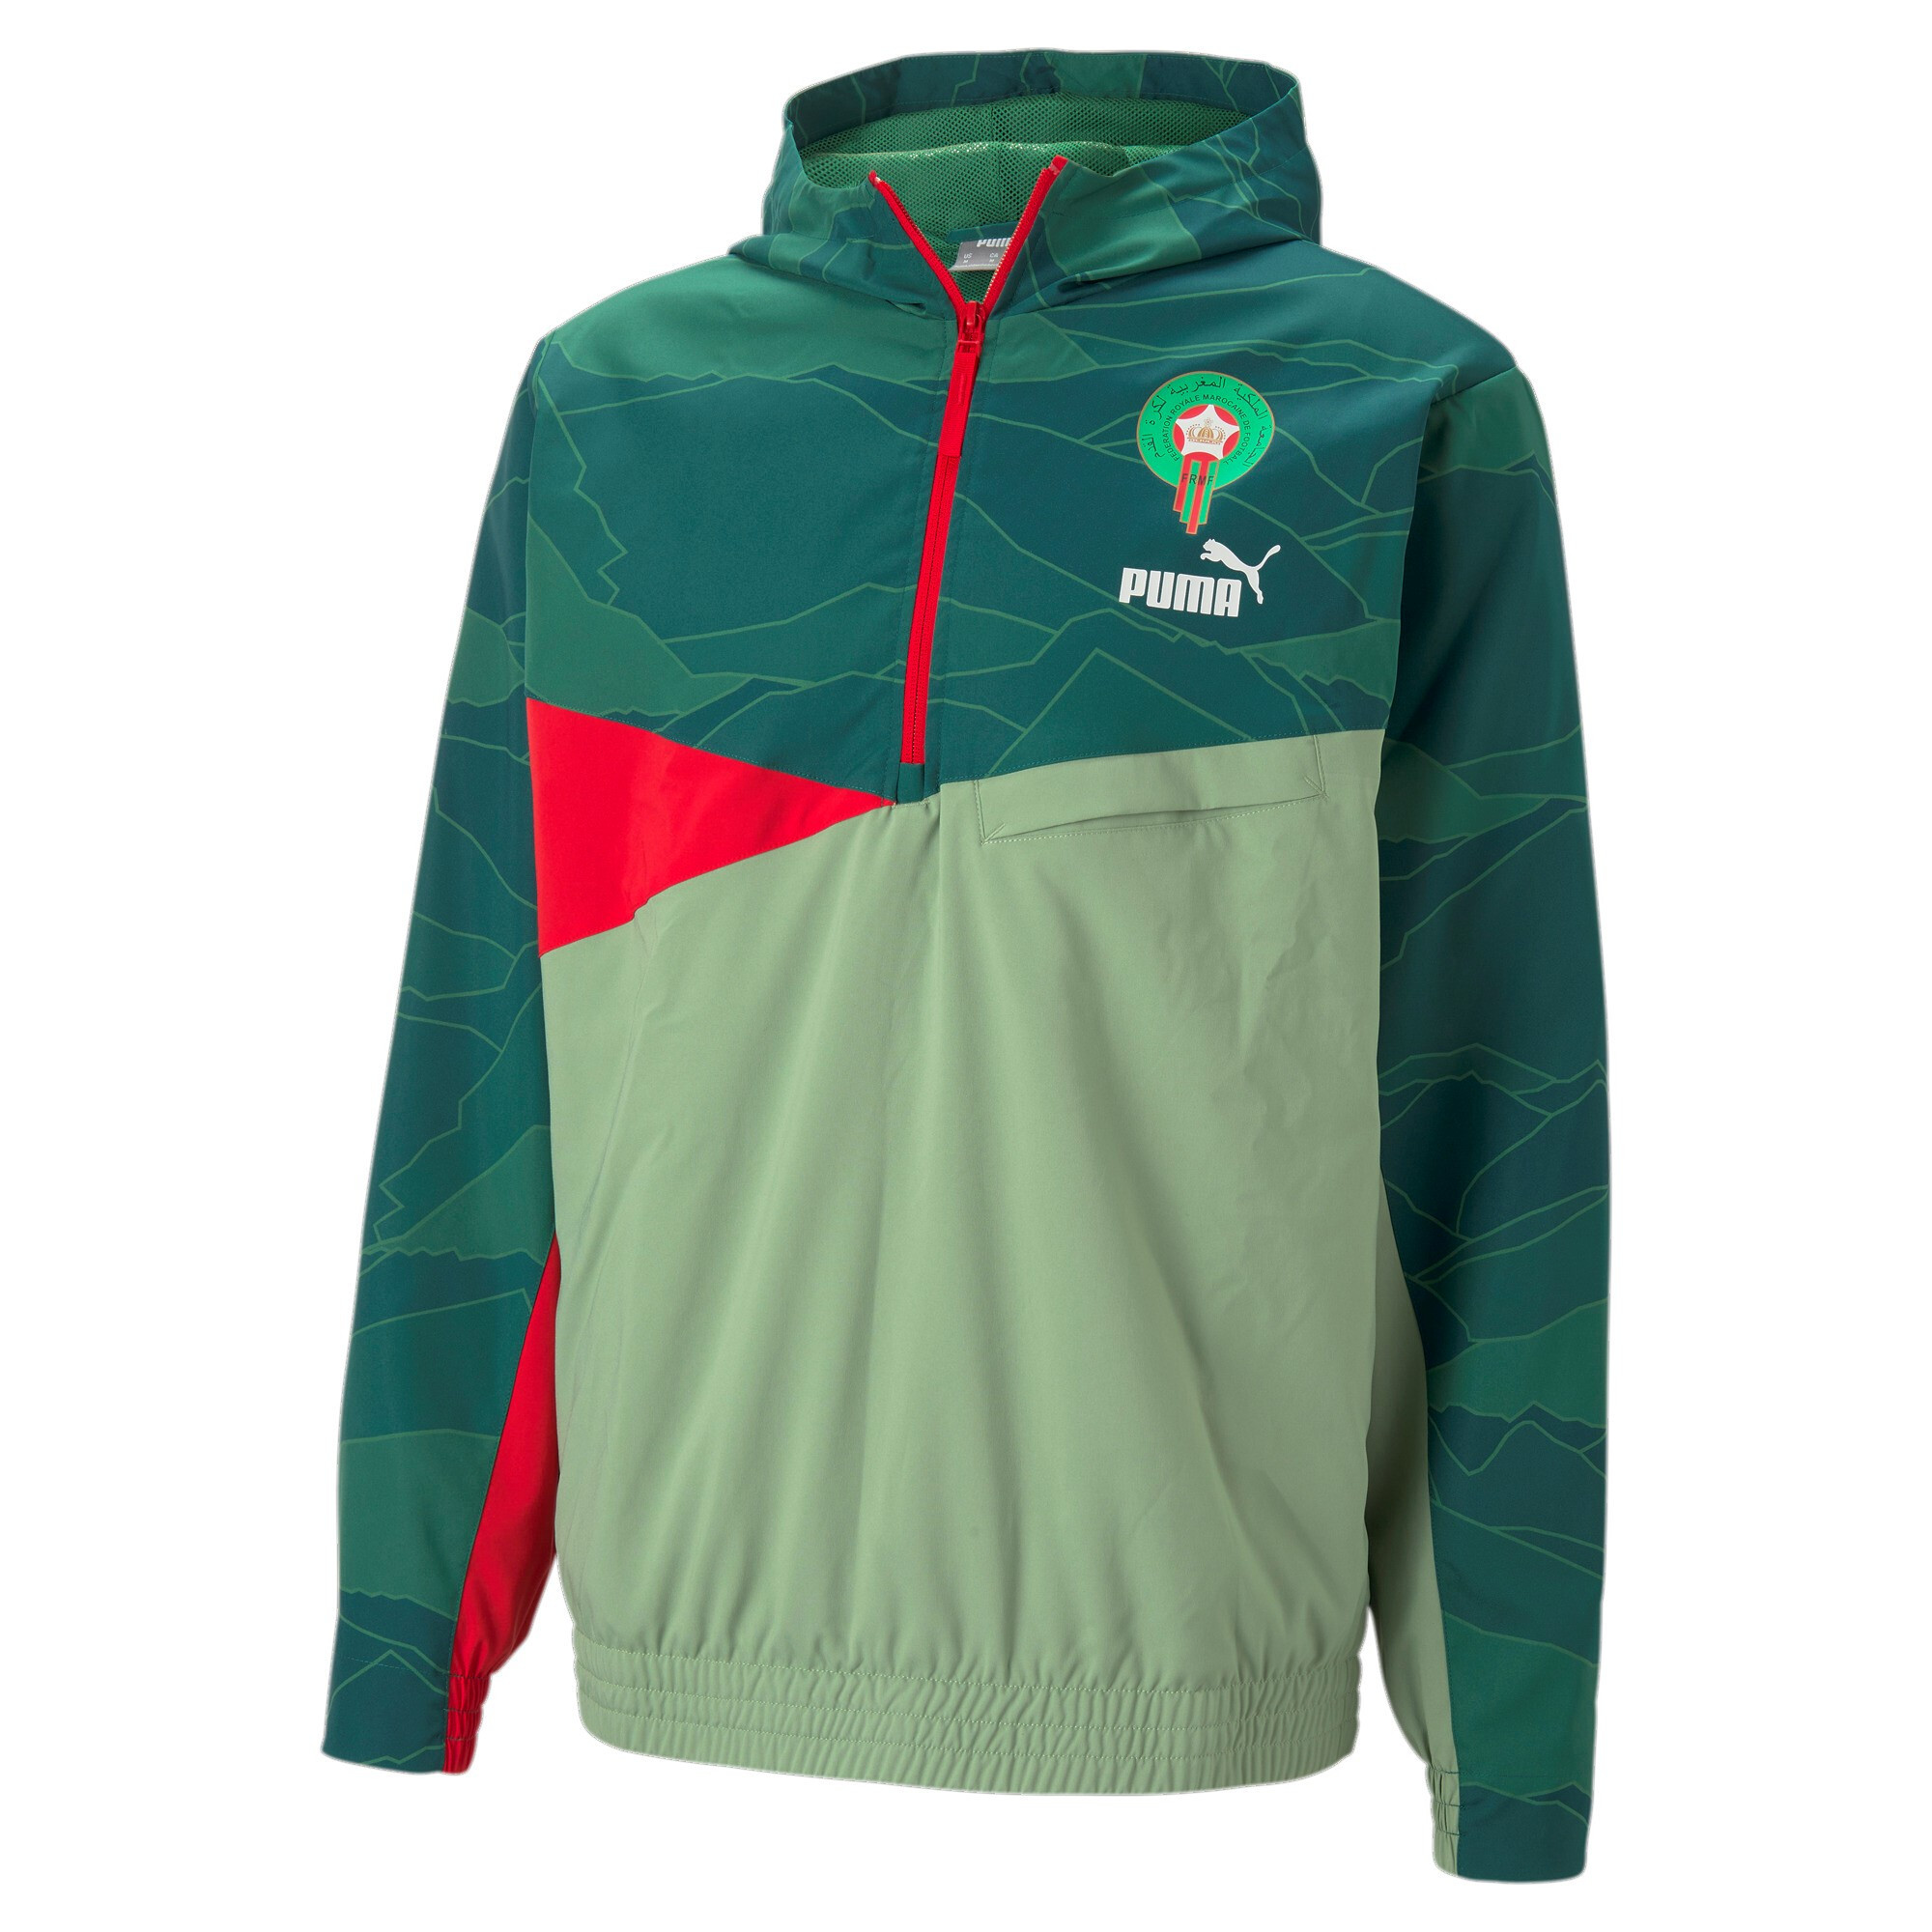 Puma Morocco Men's Football 1/2 Zip tracksuit hoodie - Vine/Dusty Green